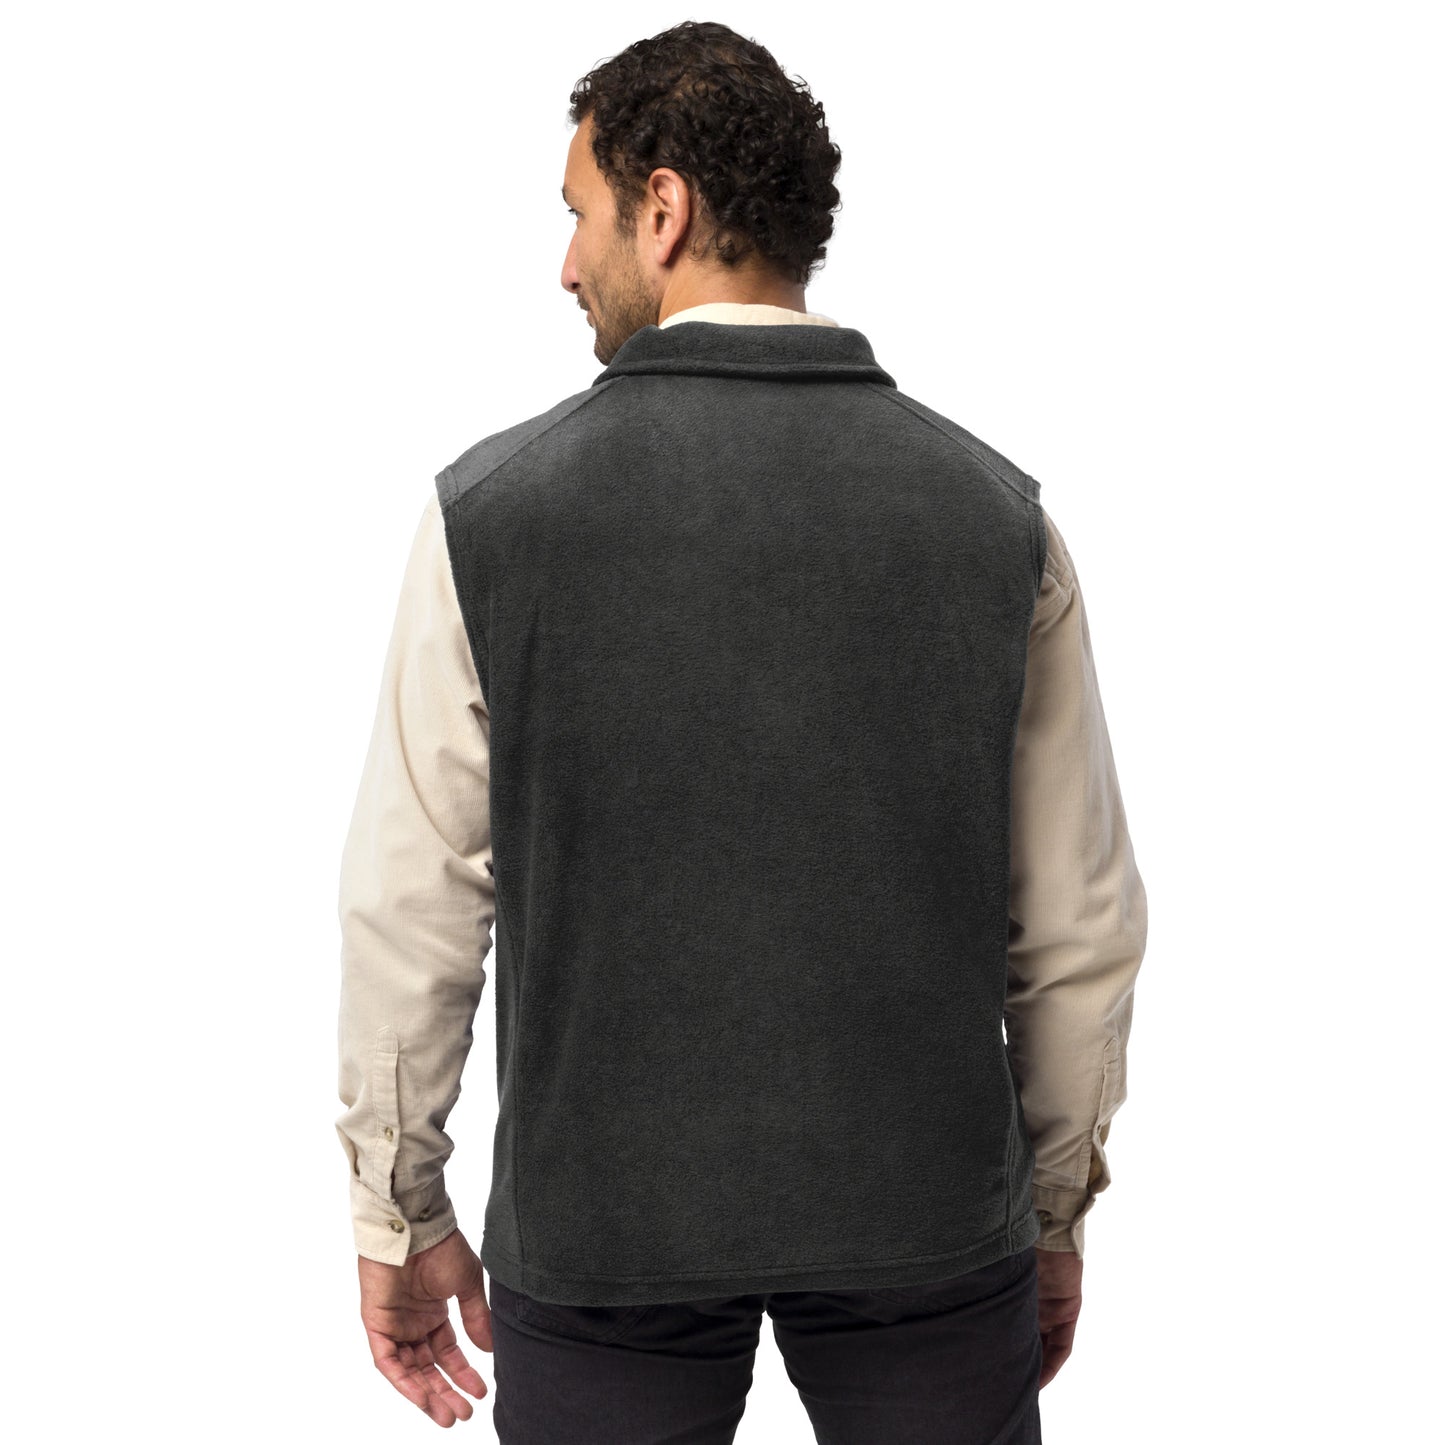 Men’s Columbia fleece vest - Donates $10